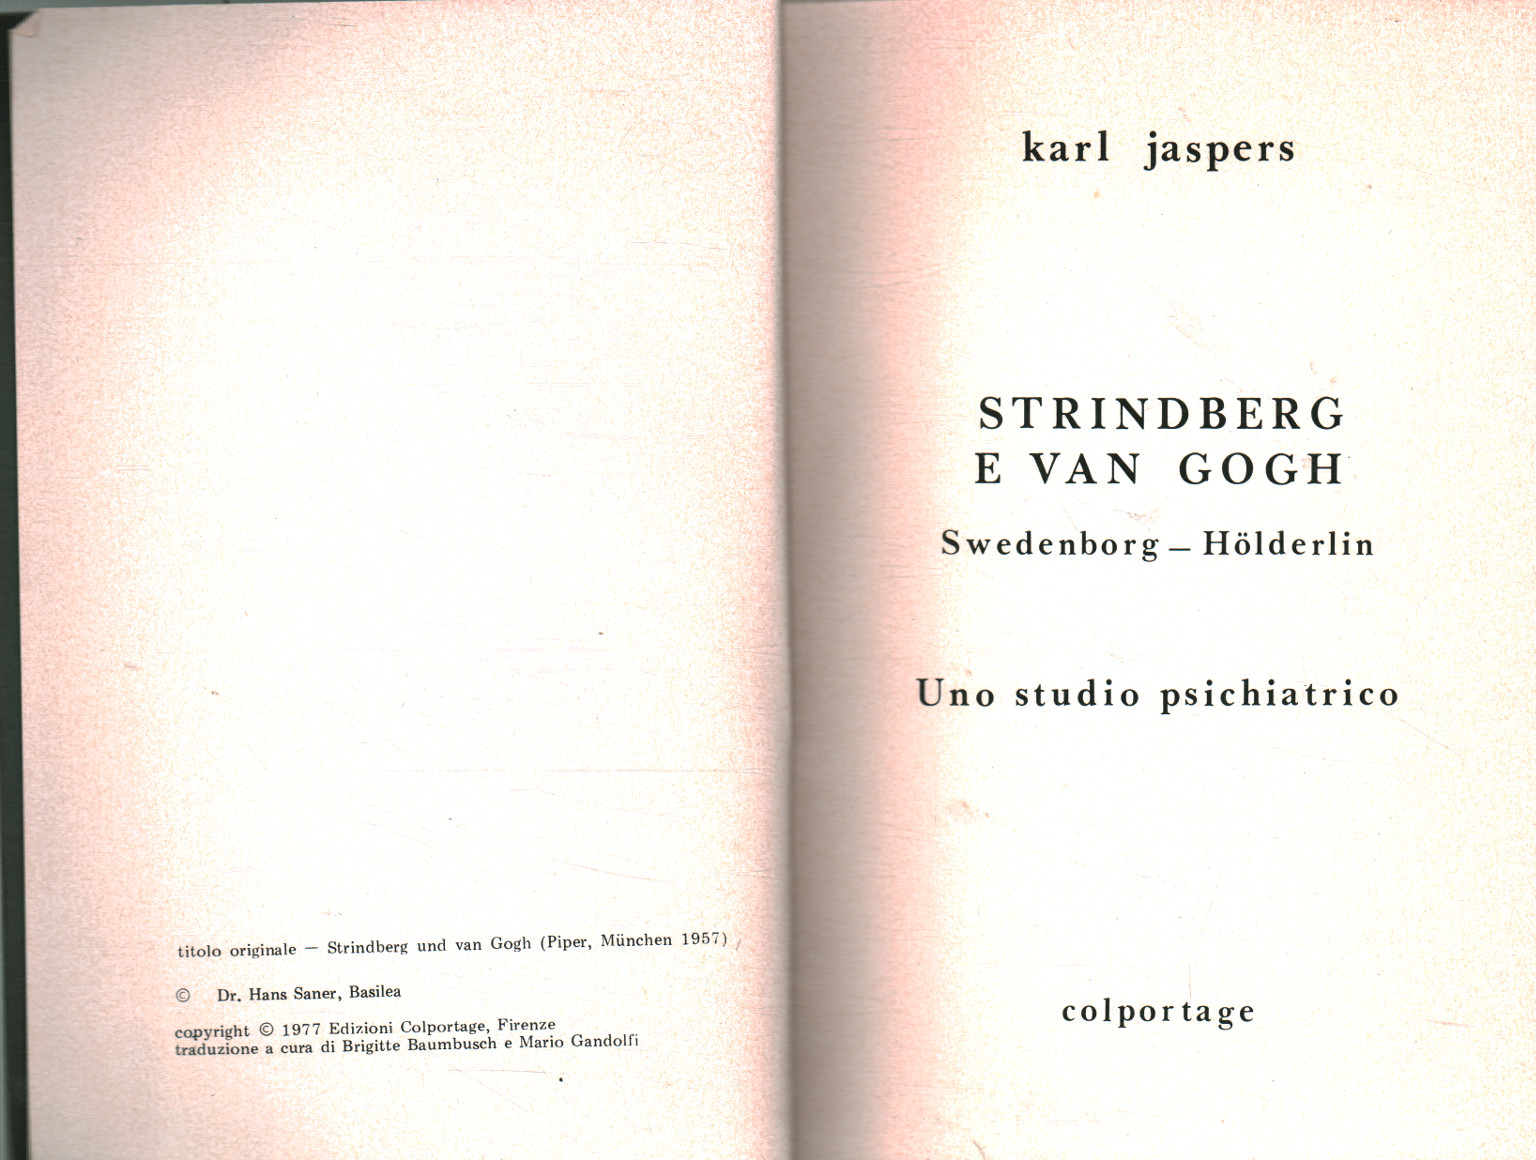 Strindberg e Van Gogh, Karl Jaspers